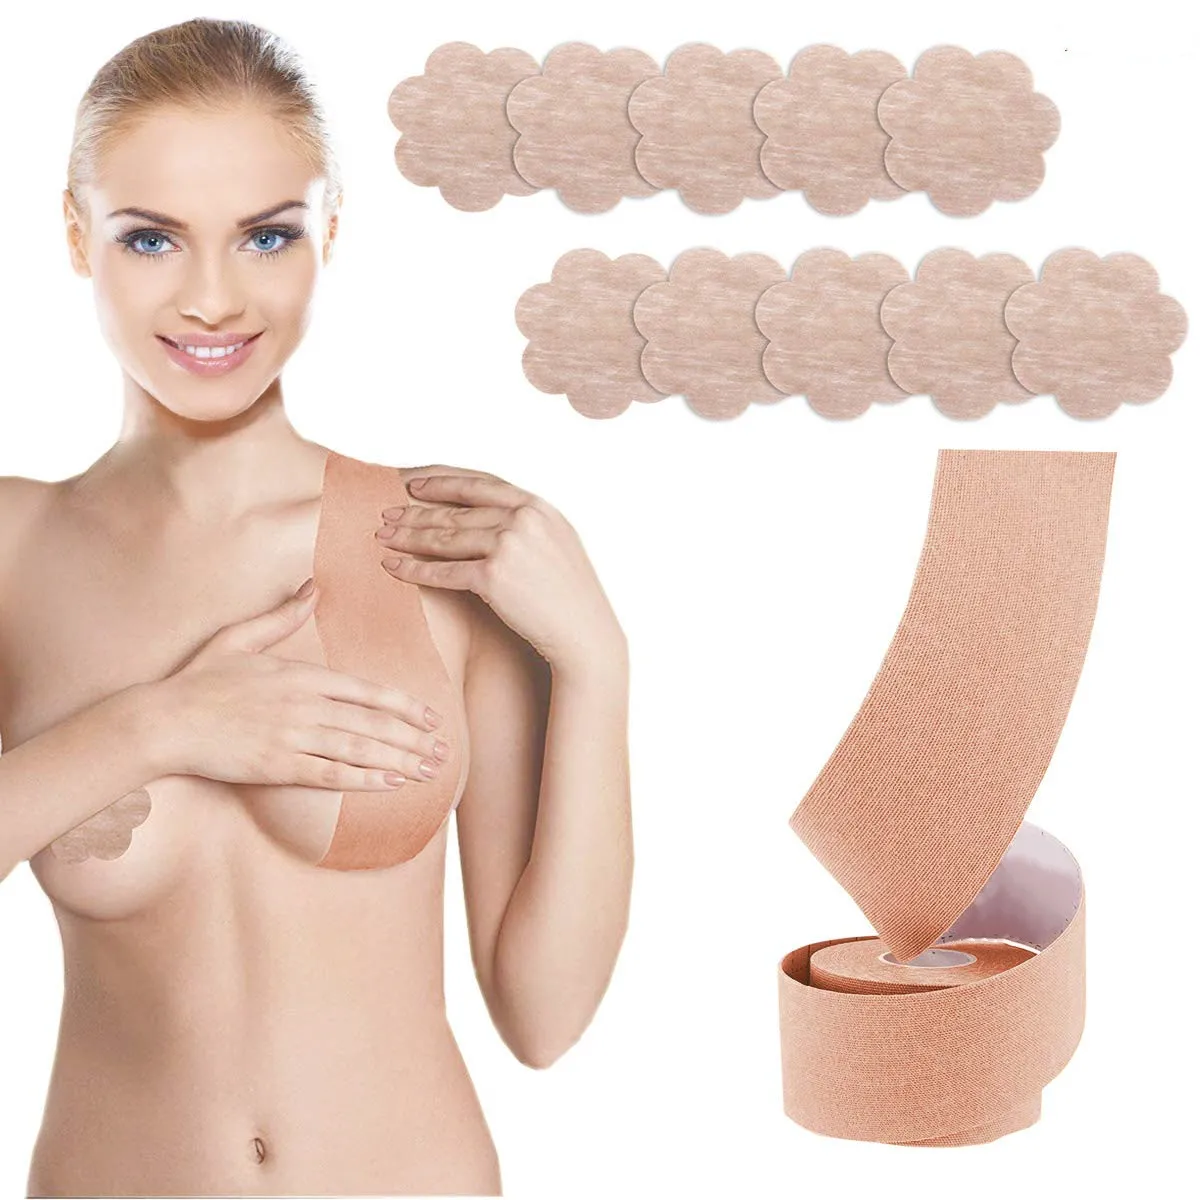 Gynastic nipples